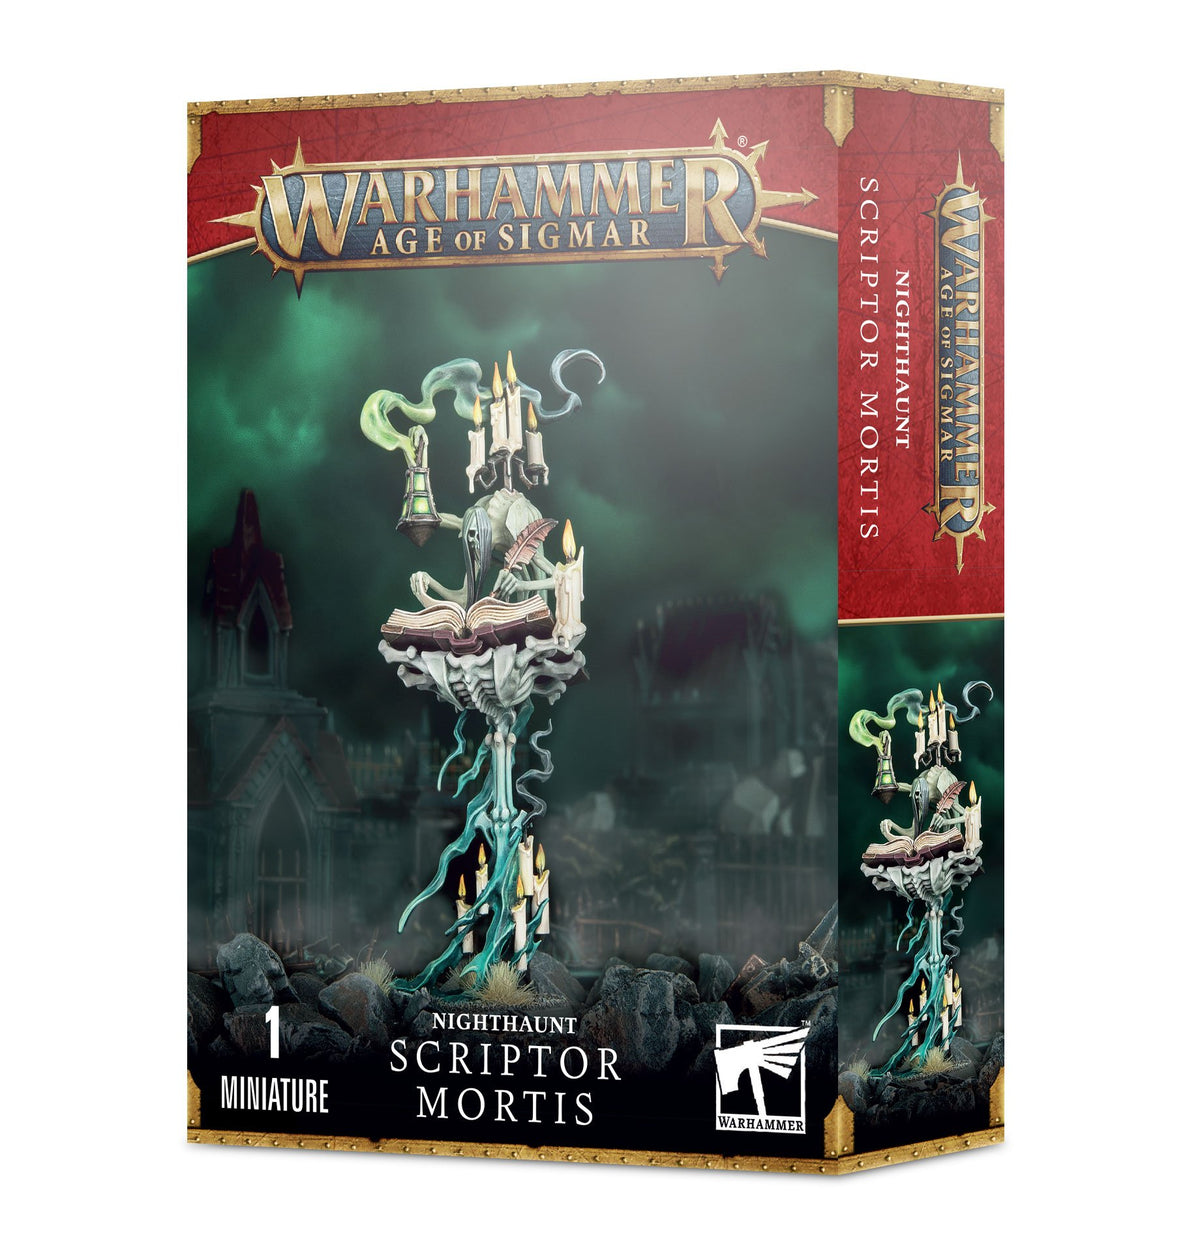 Nighthaunt - Scriptor Mortis (Warhammer Age of Sigmar)